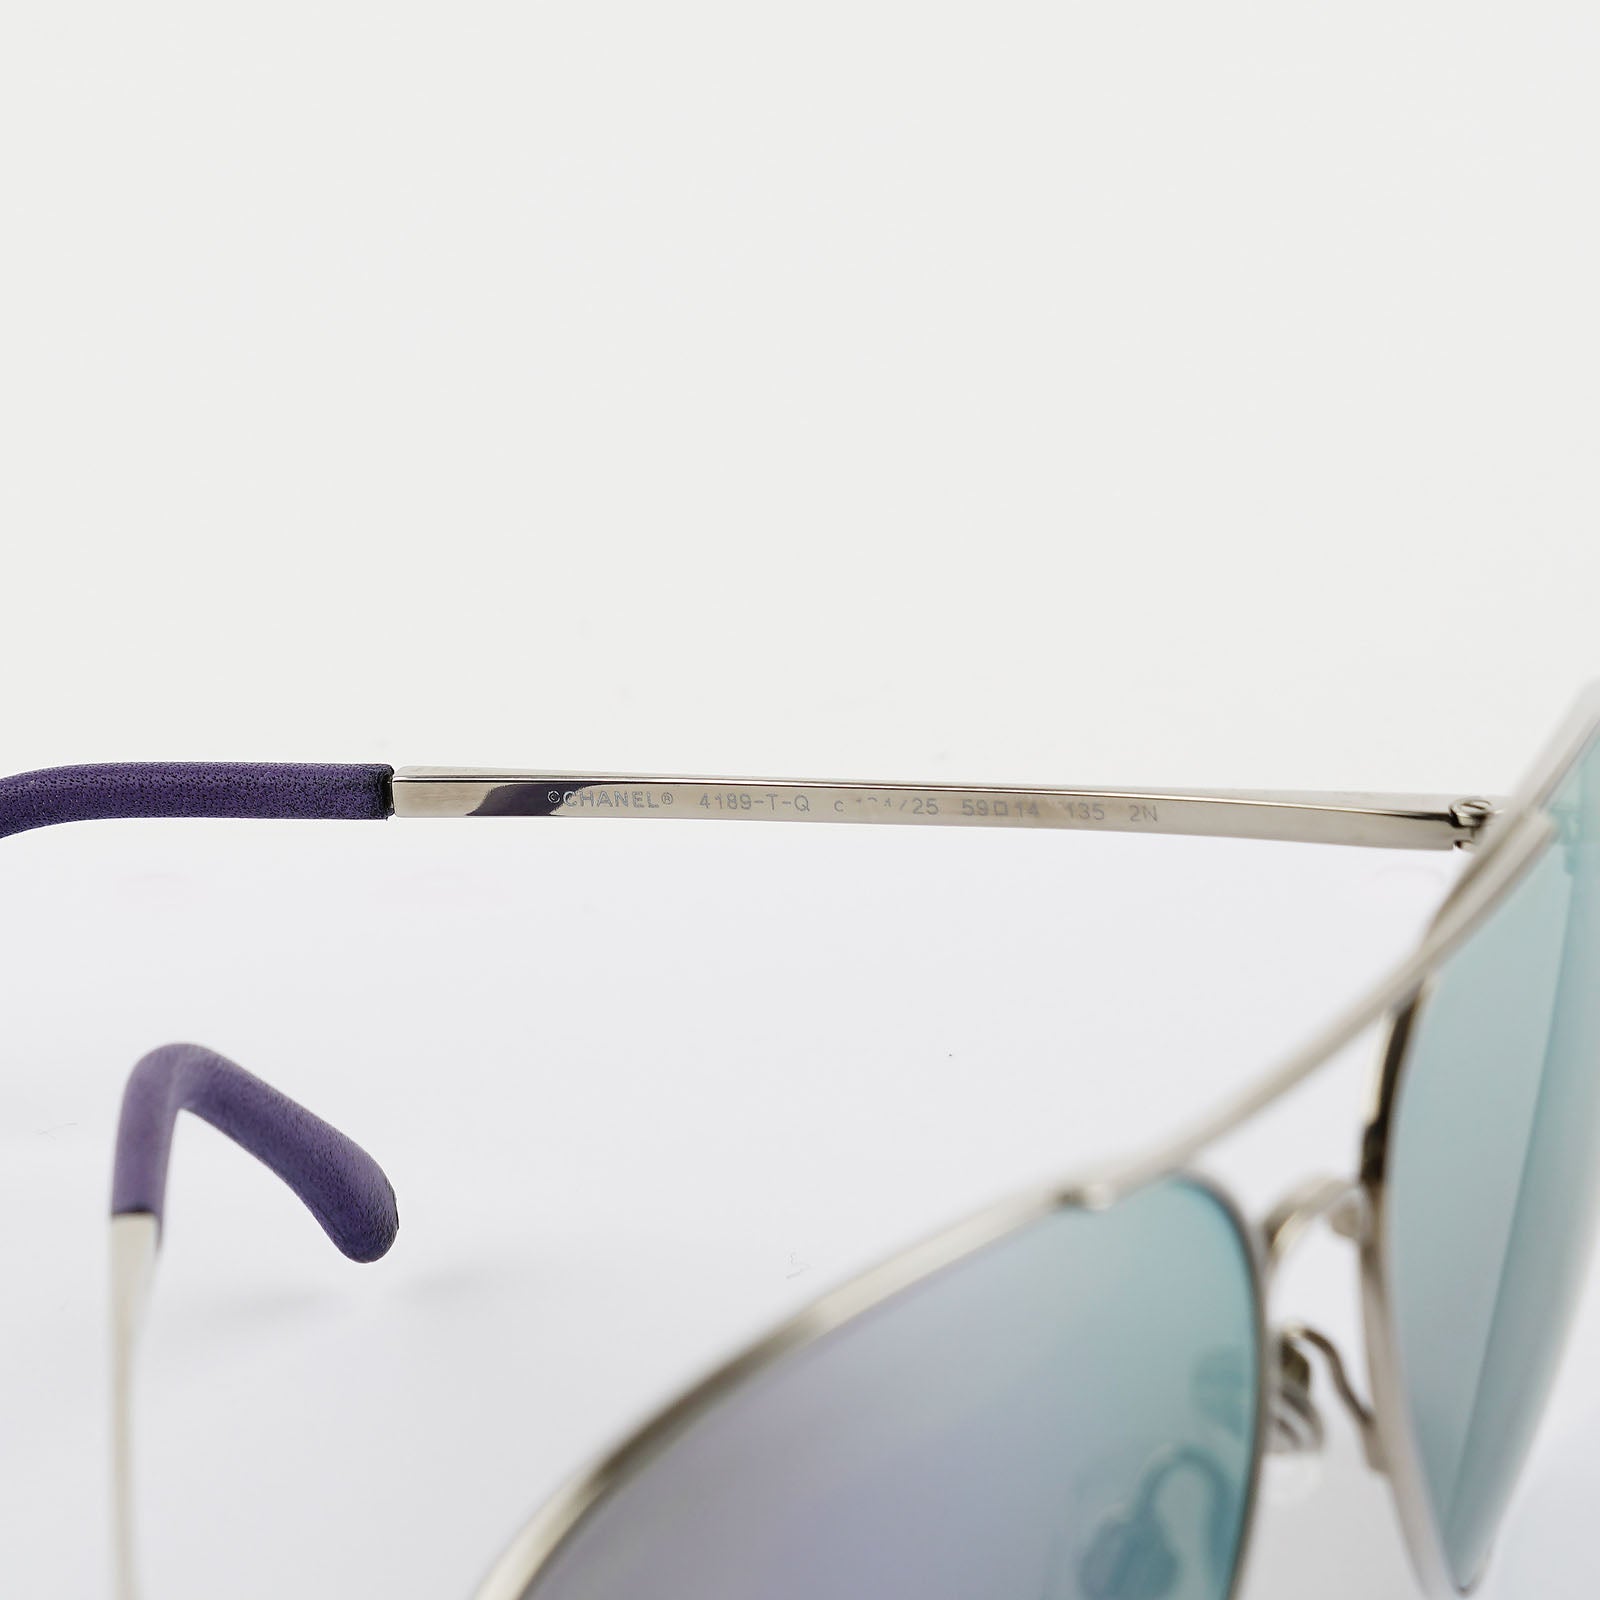 Aviator Sunglasses - CHANEL - Affordable Luxury image